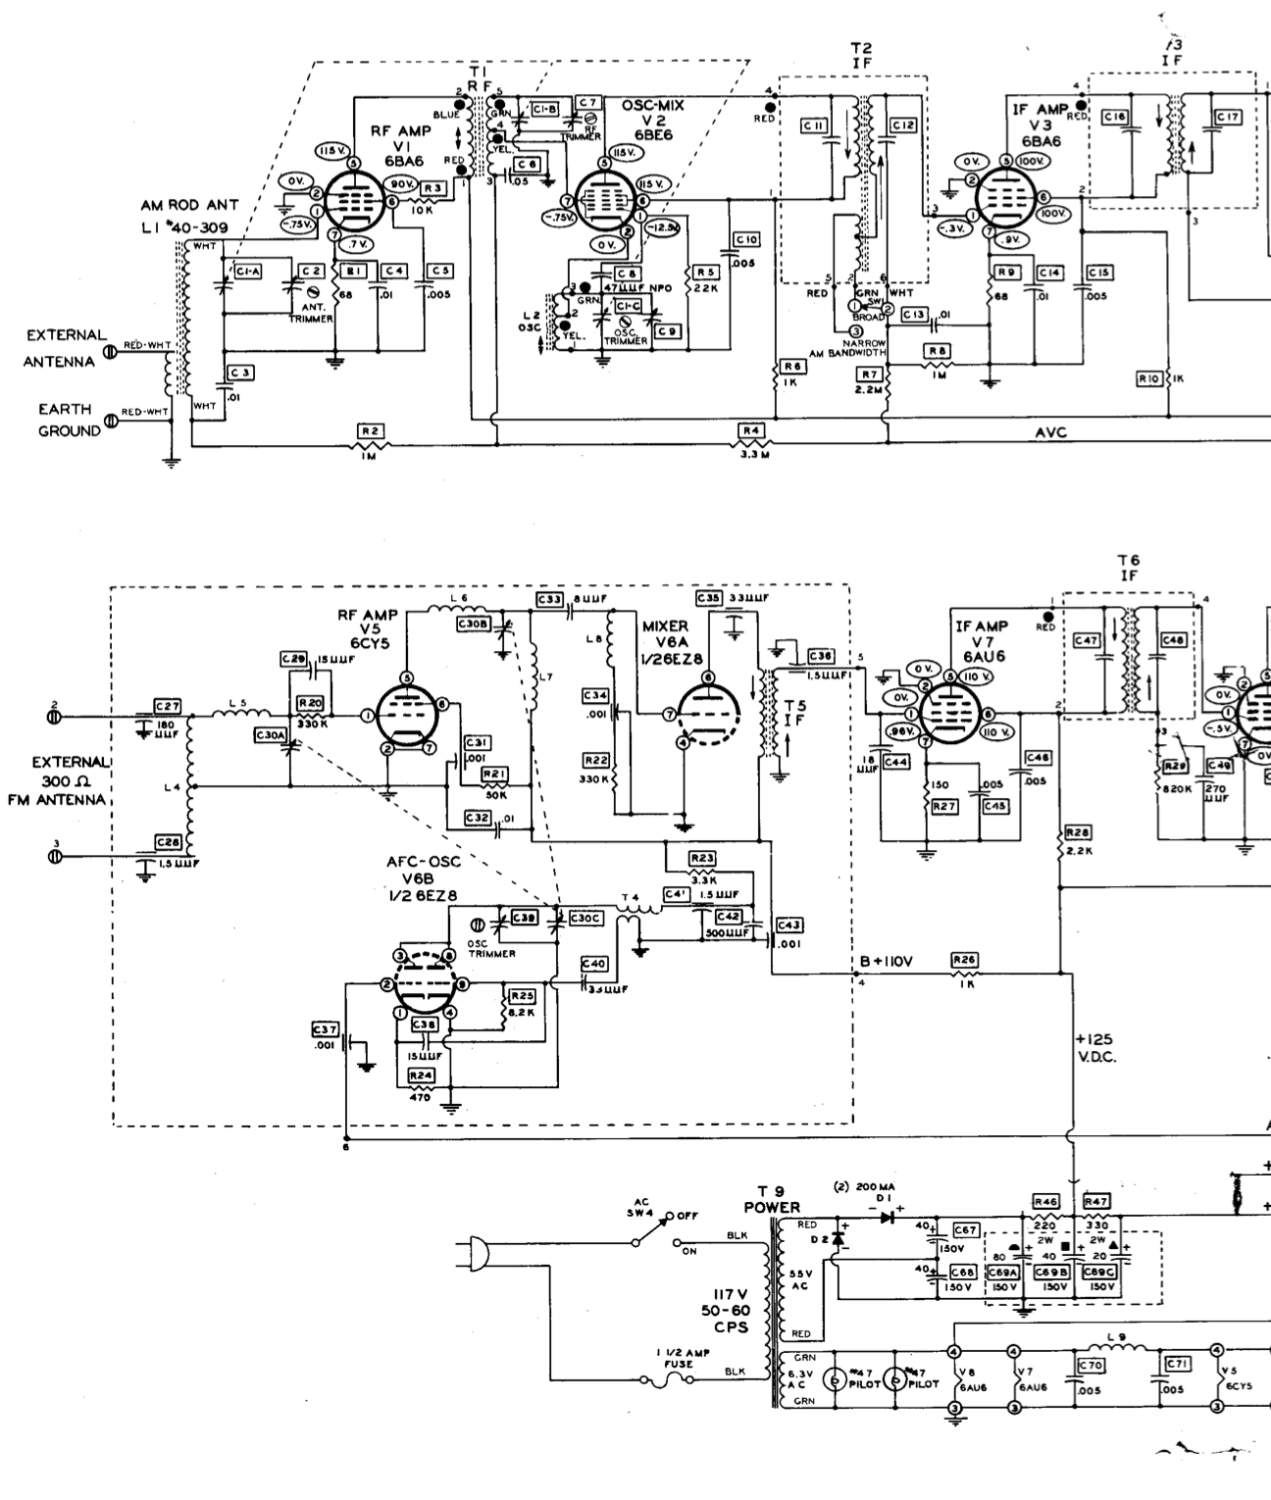 Heathkit AJ-10A AM-FM Tuner - Schematic Diagrams